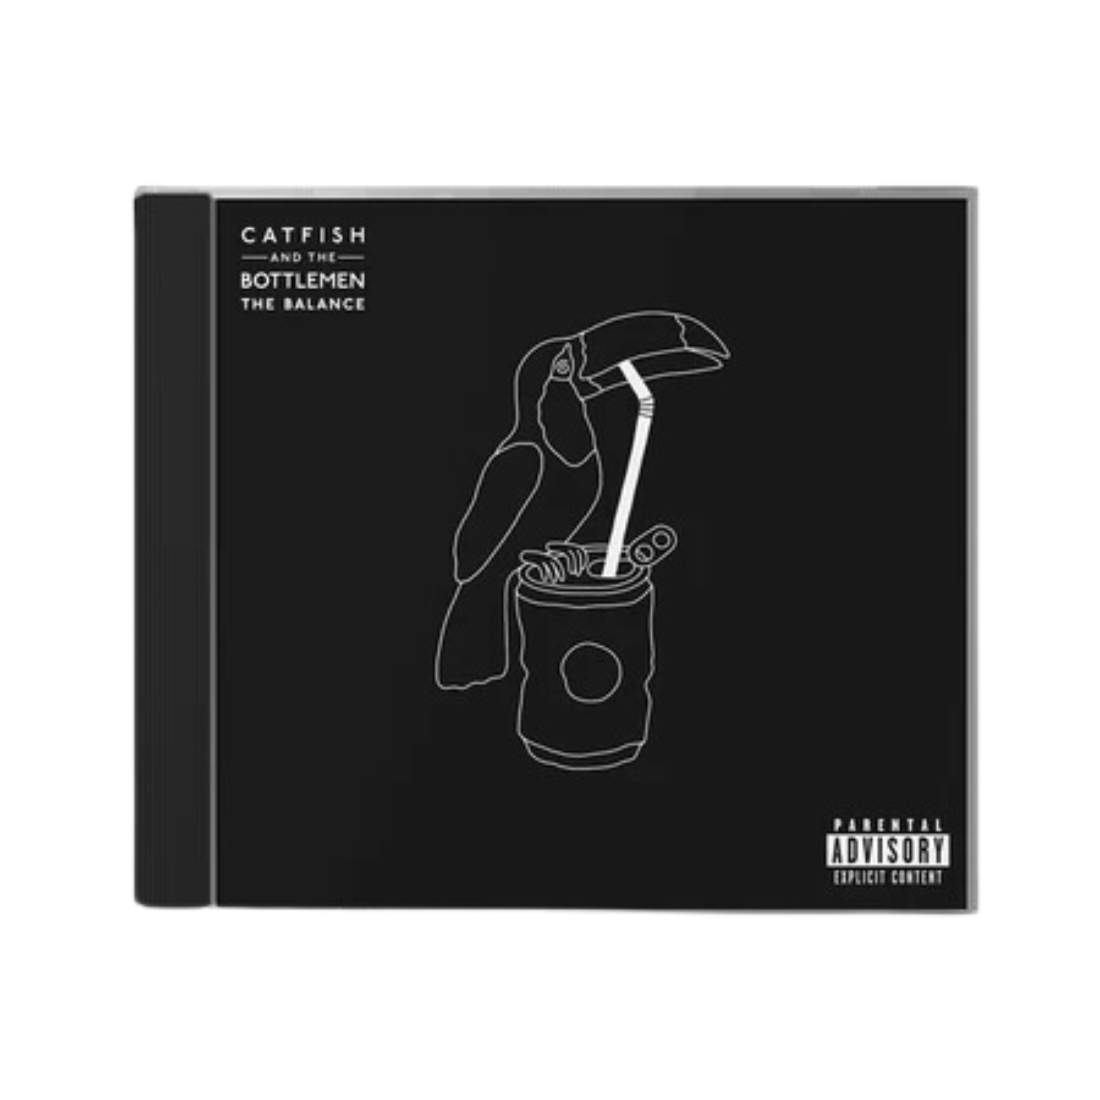 Catfish and the Bottlemen - The Balance CD